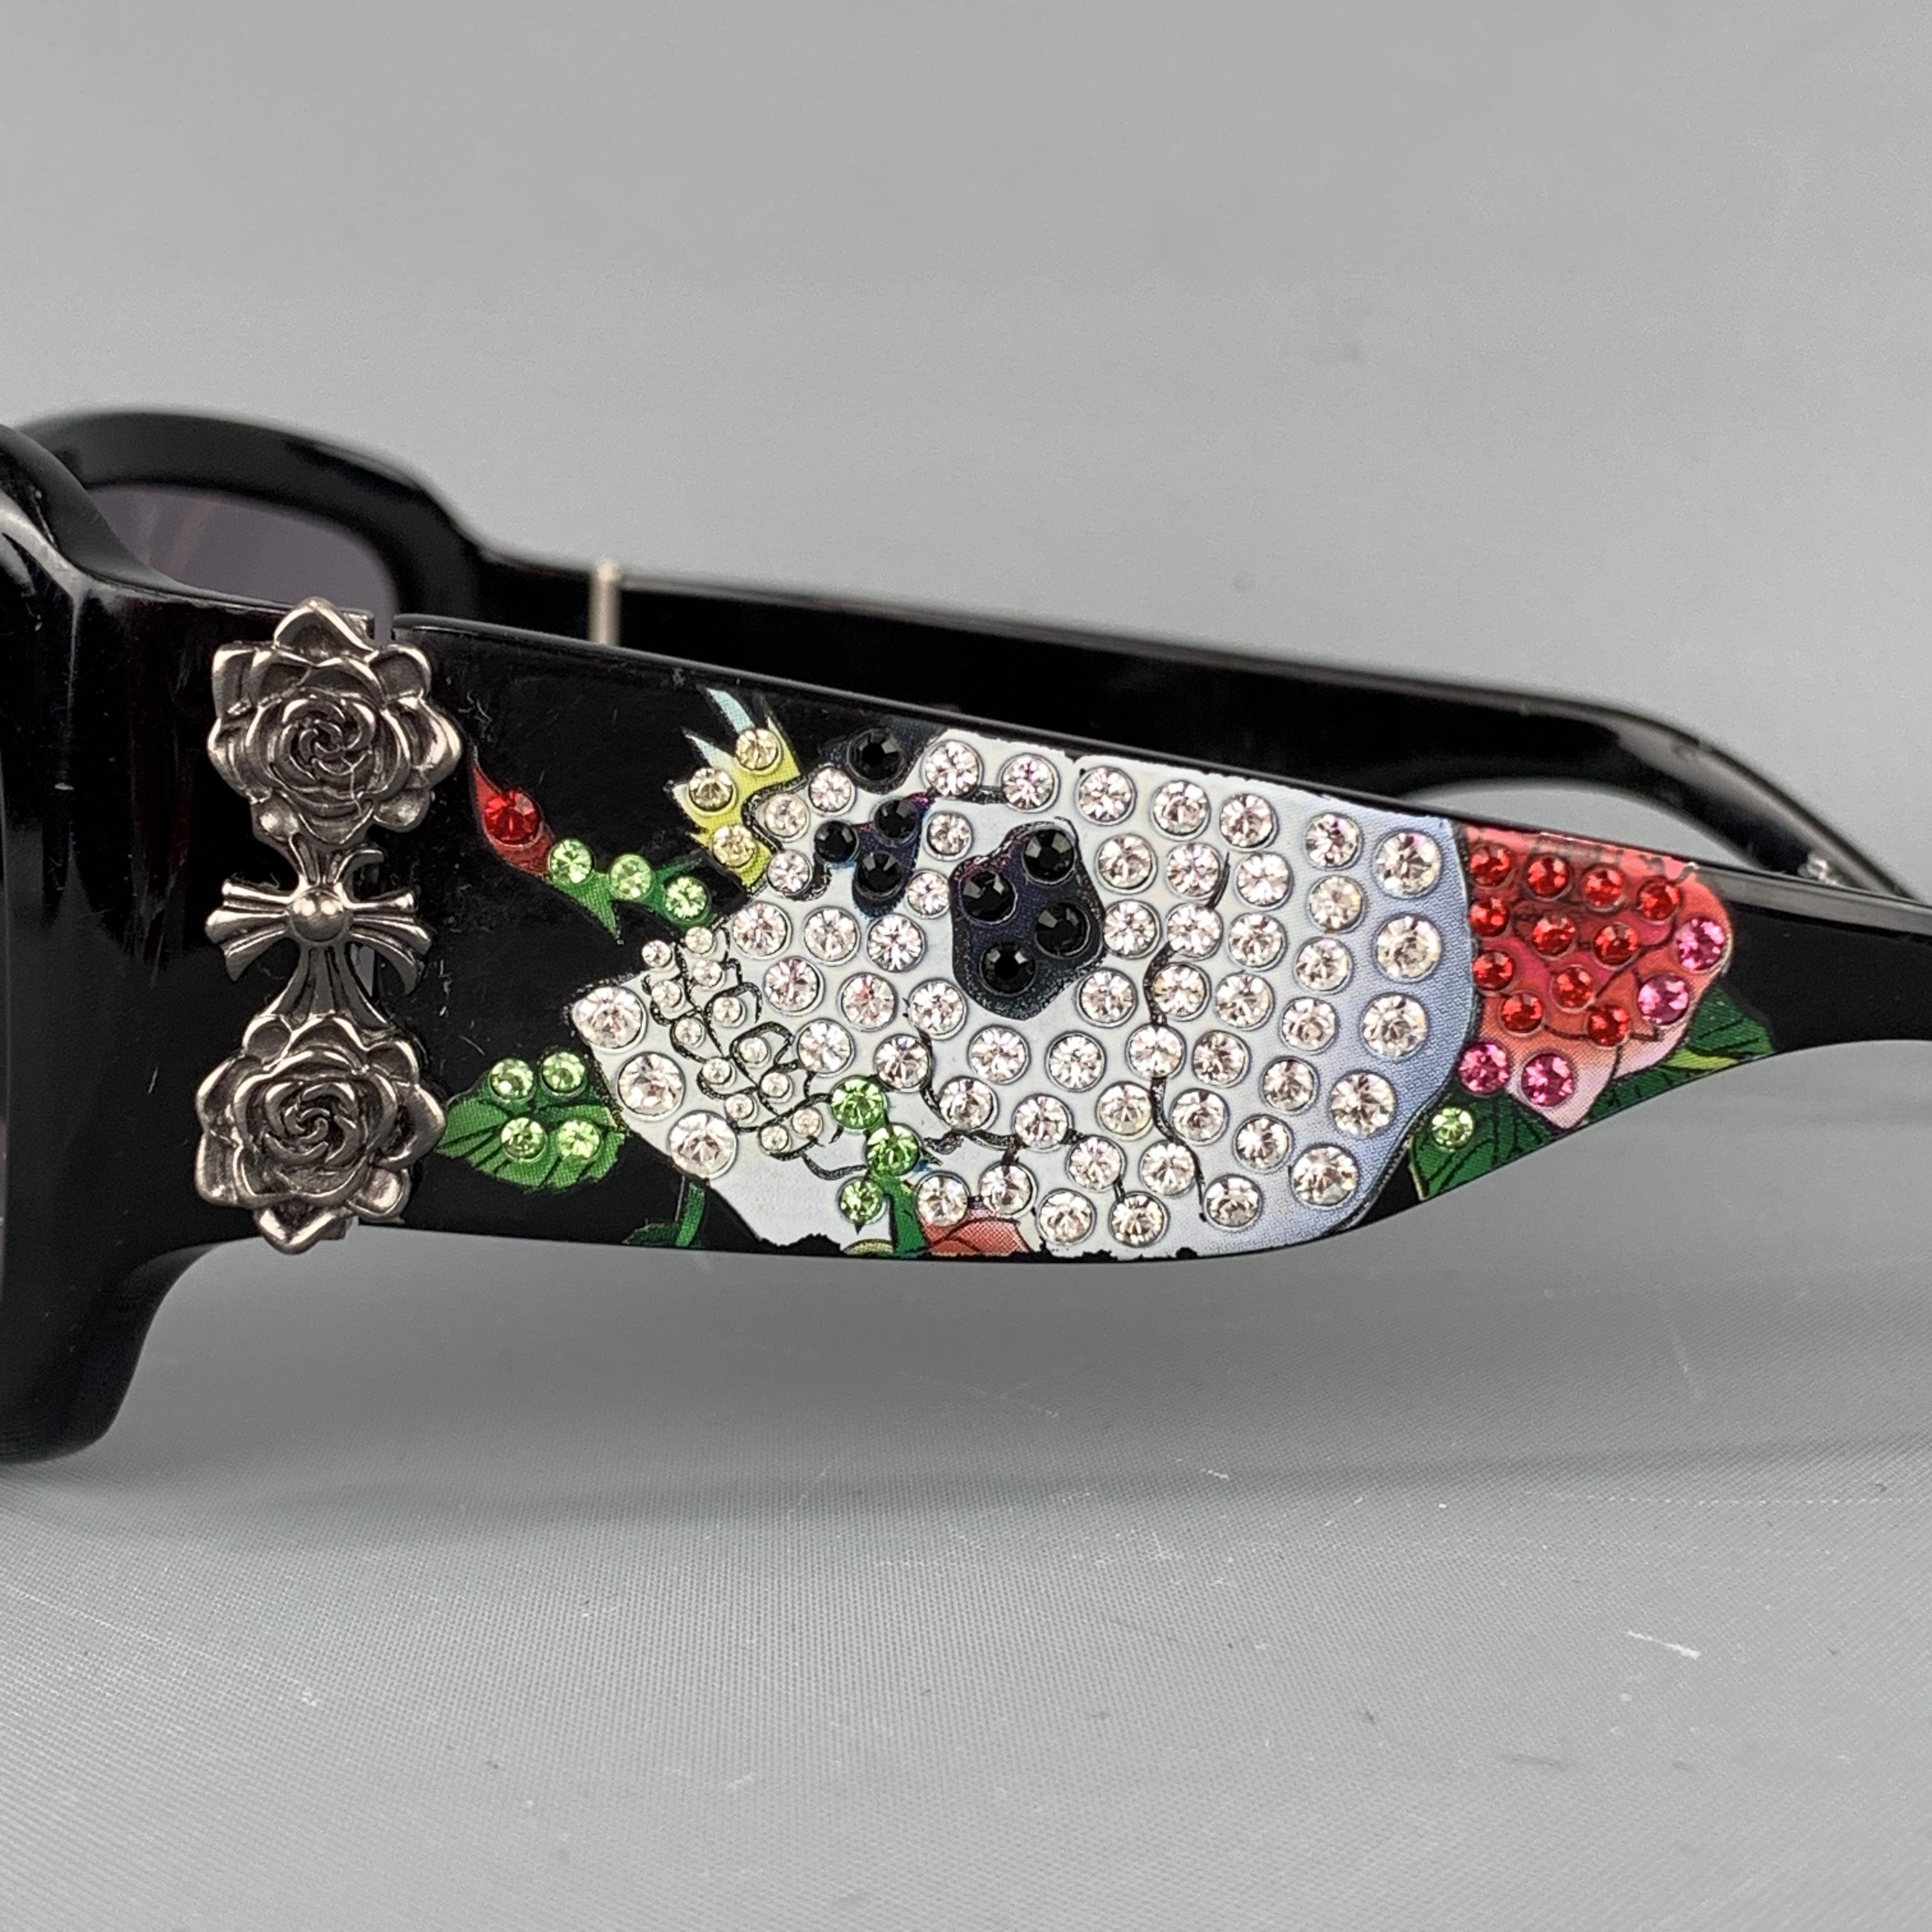 ed hardy sunglasses with swarovski crystals